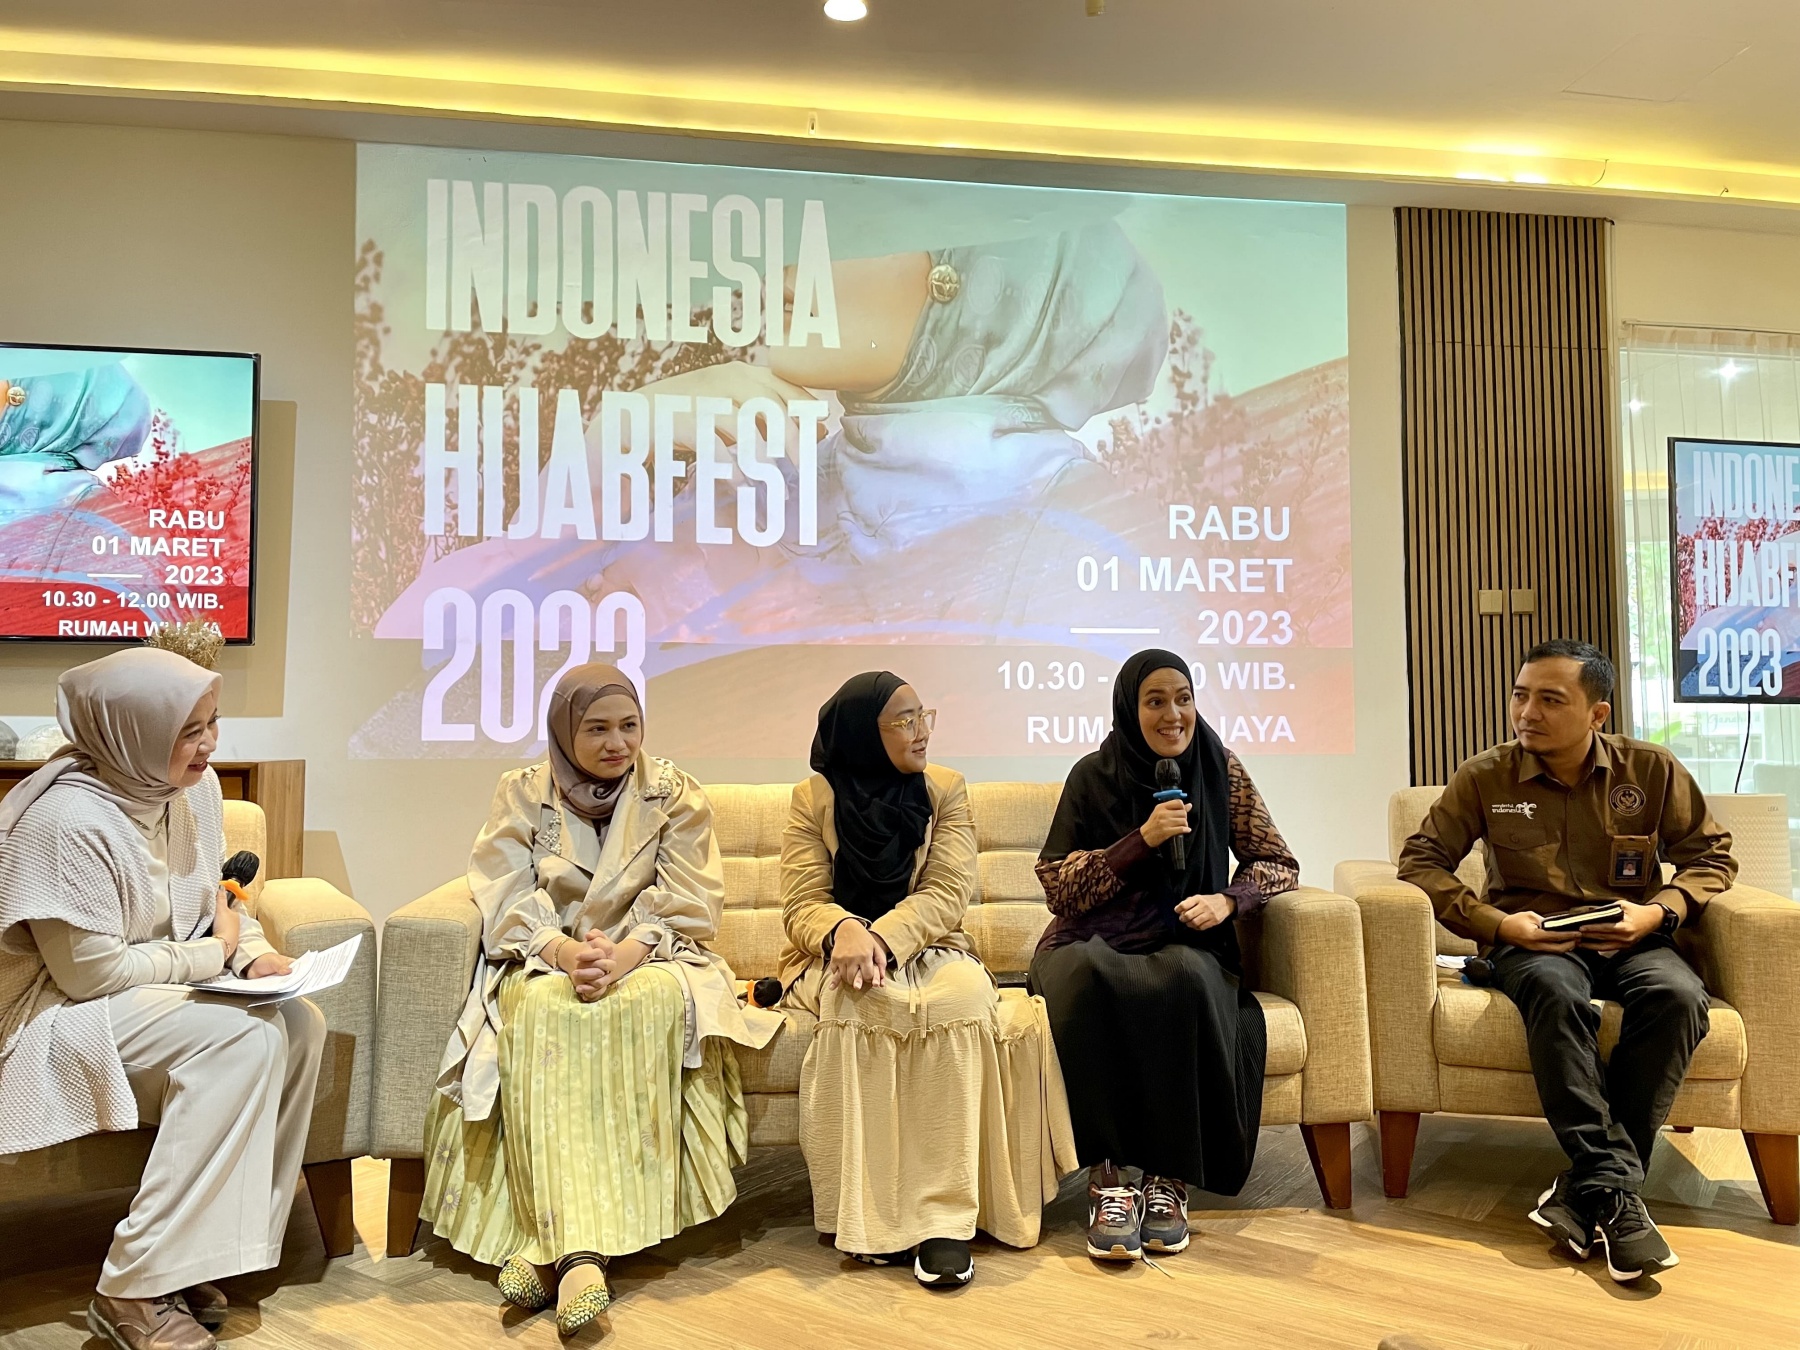 Indonesia Hijabfest 2023 Digelar 2-5 Maret di Sabuga, Warga Bandung Merapat!